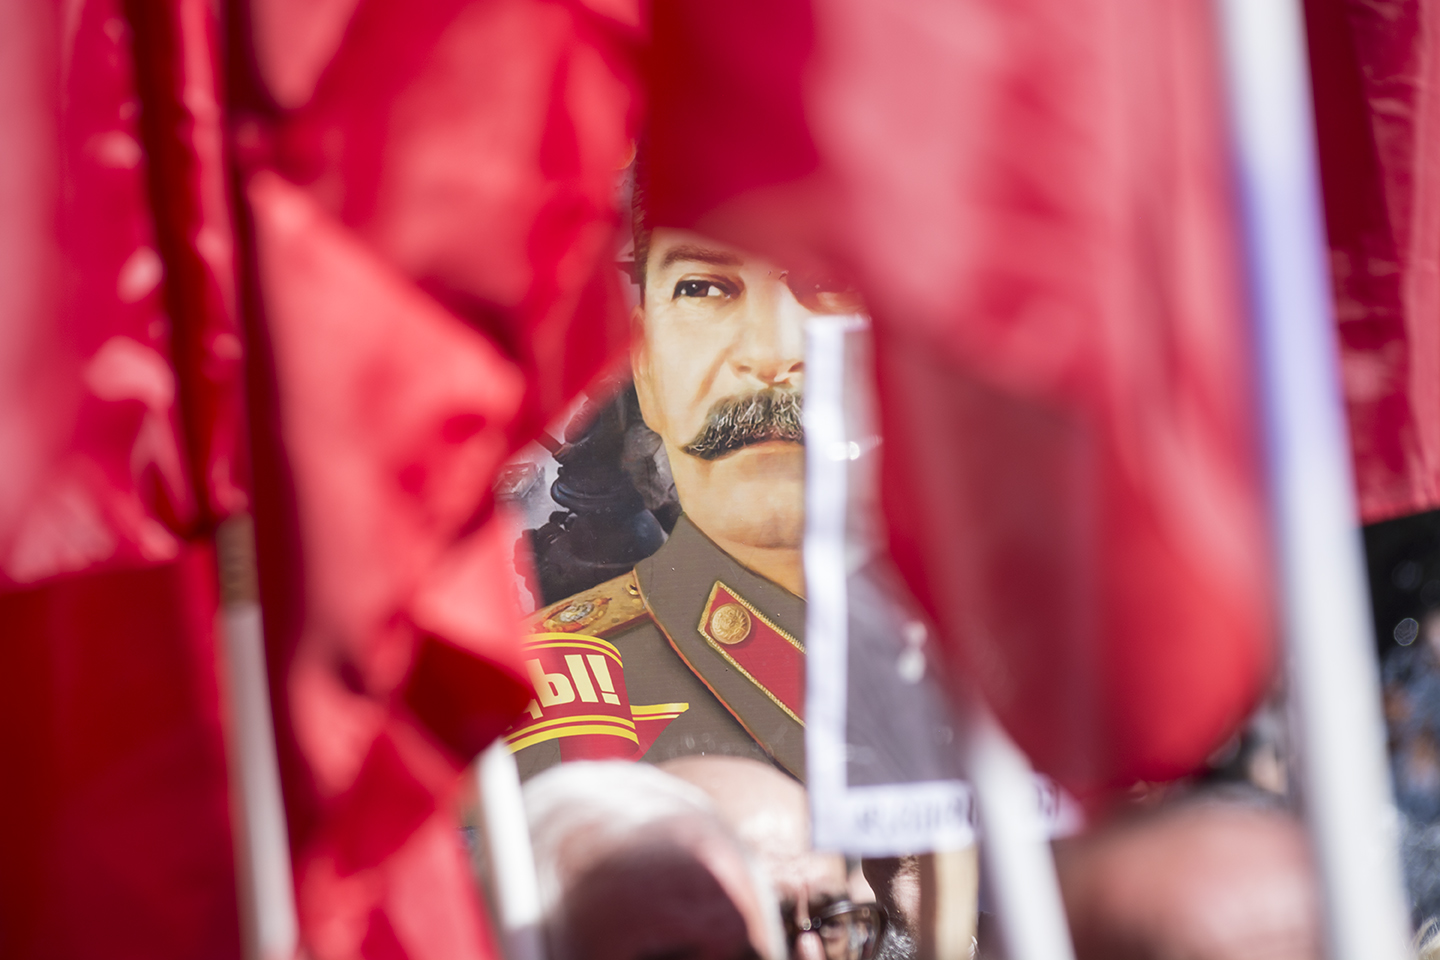 DSC 1500 #новости Дзамболат Тедеев, Иосиф Сталин, Цорбиси, Южная Осетия